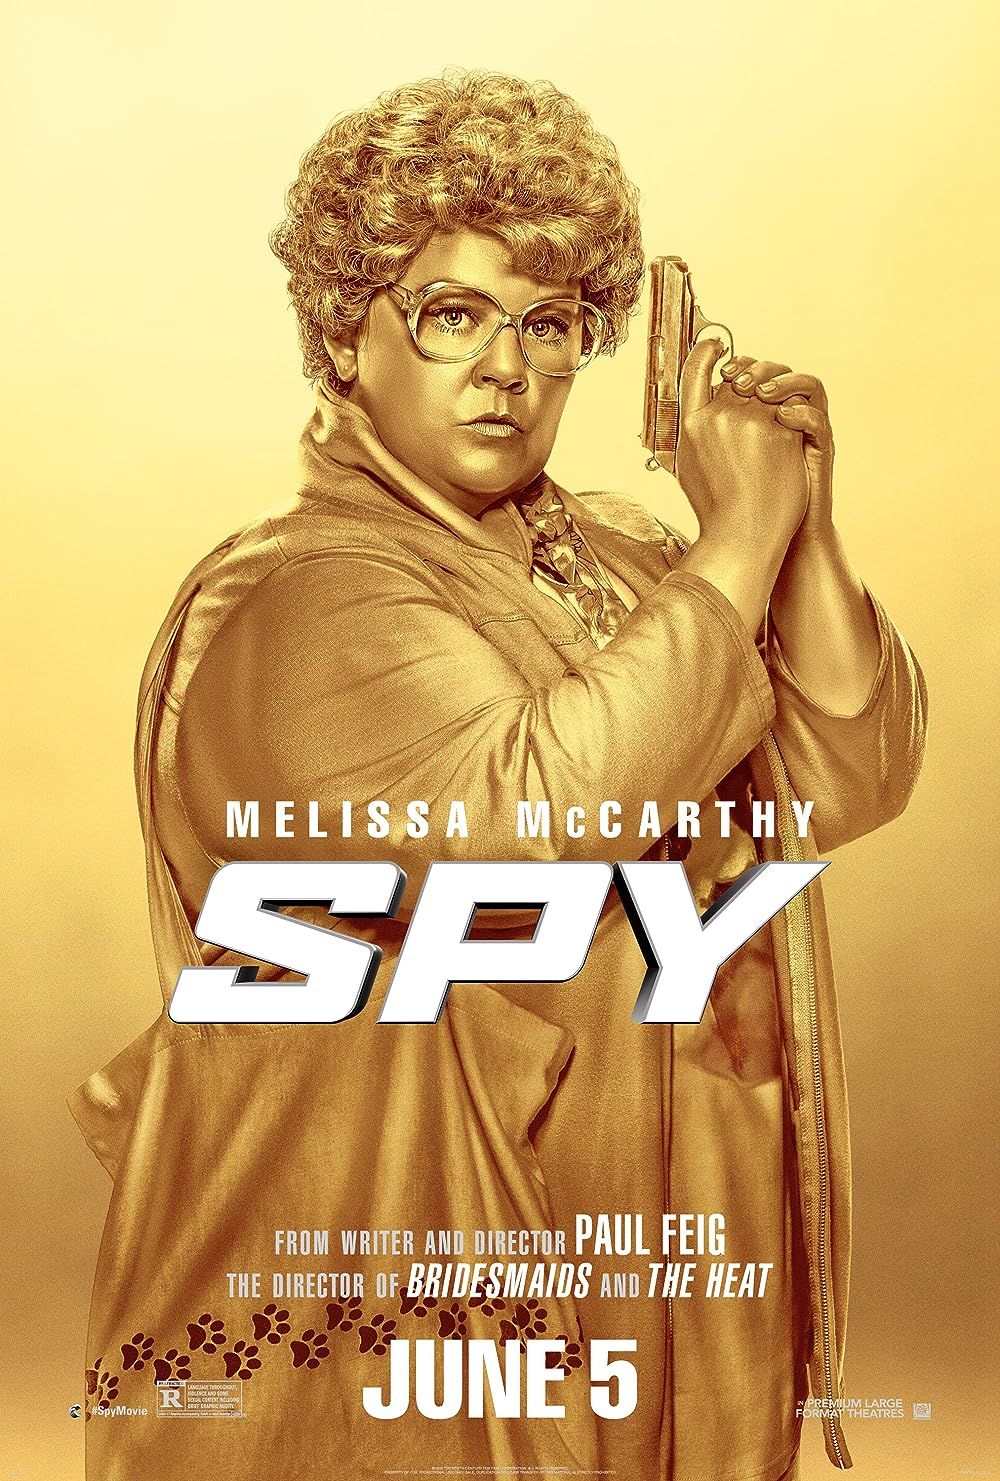 Melissa McCarthy on the Spy movie poster